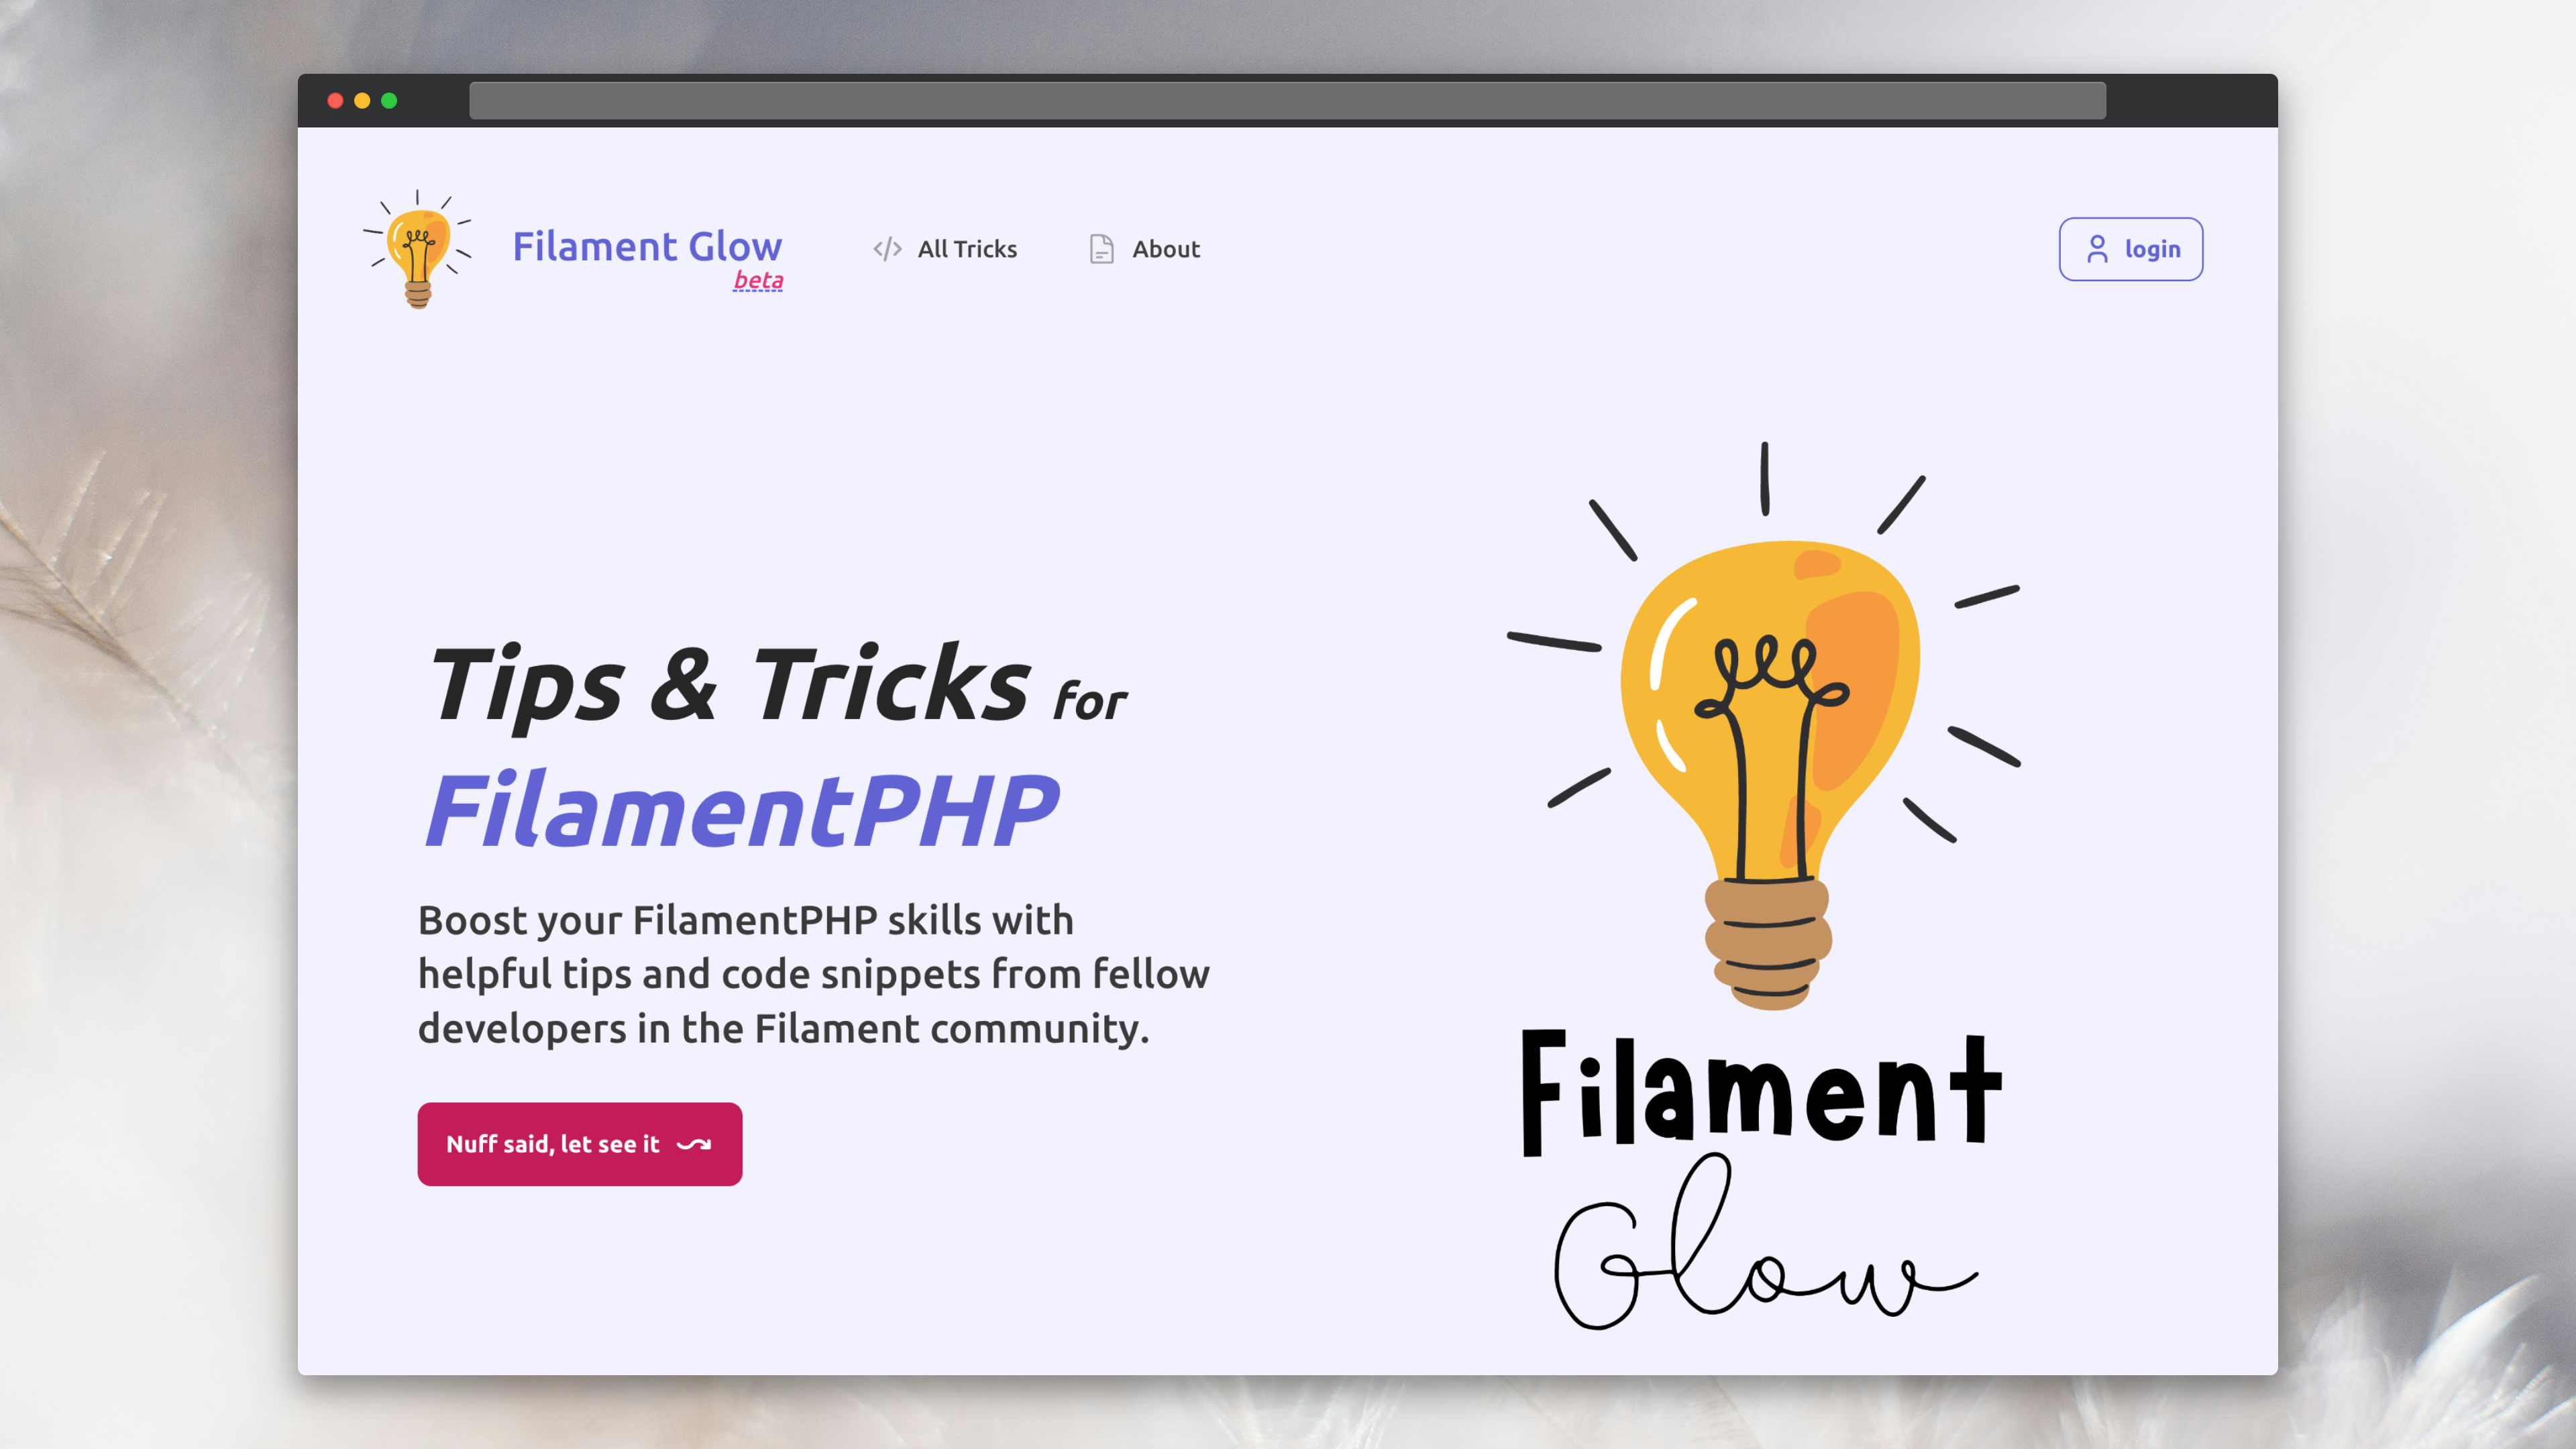 Filament Glow: Tips & Tricks for FilamentPHP